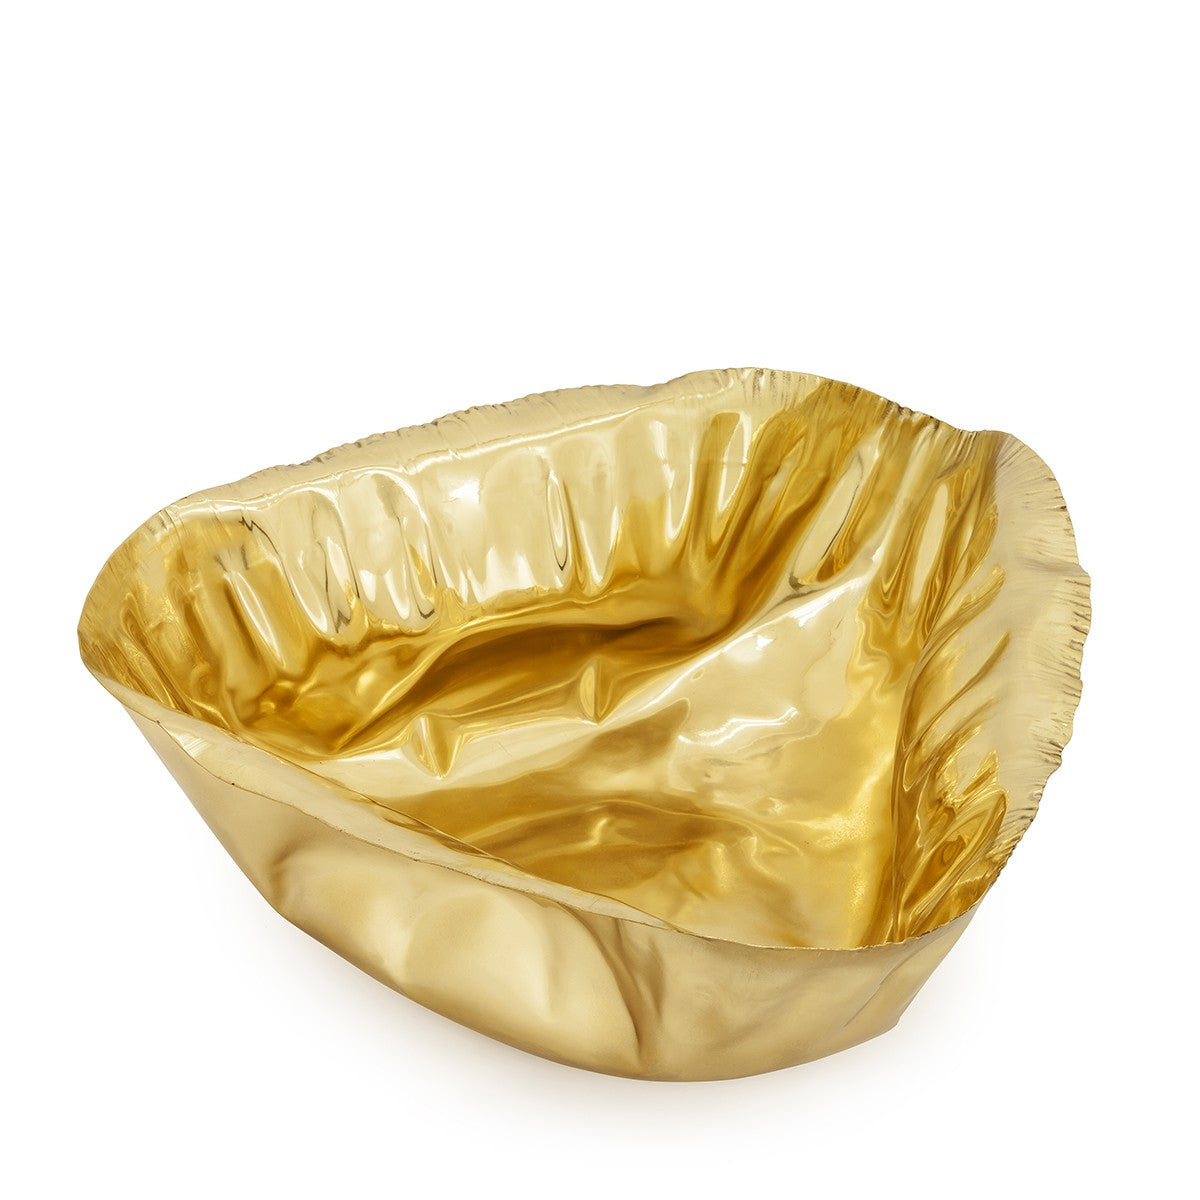 KONRAD ACCESSORIES SELECTION - Bowl & Wine Cooler "Gold"